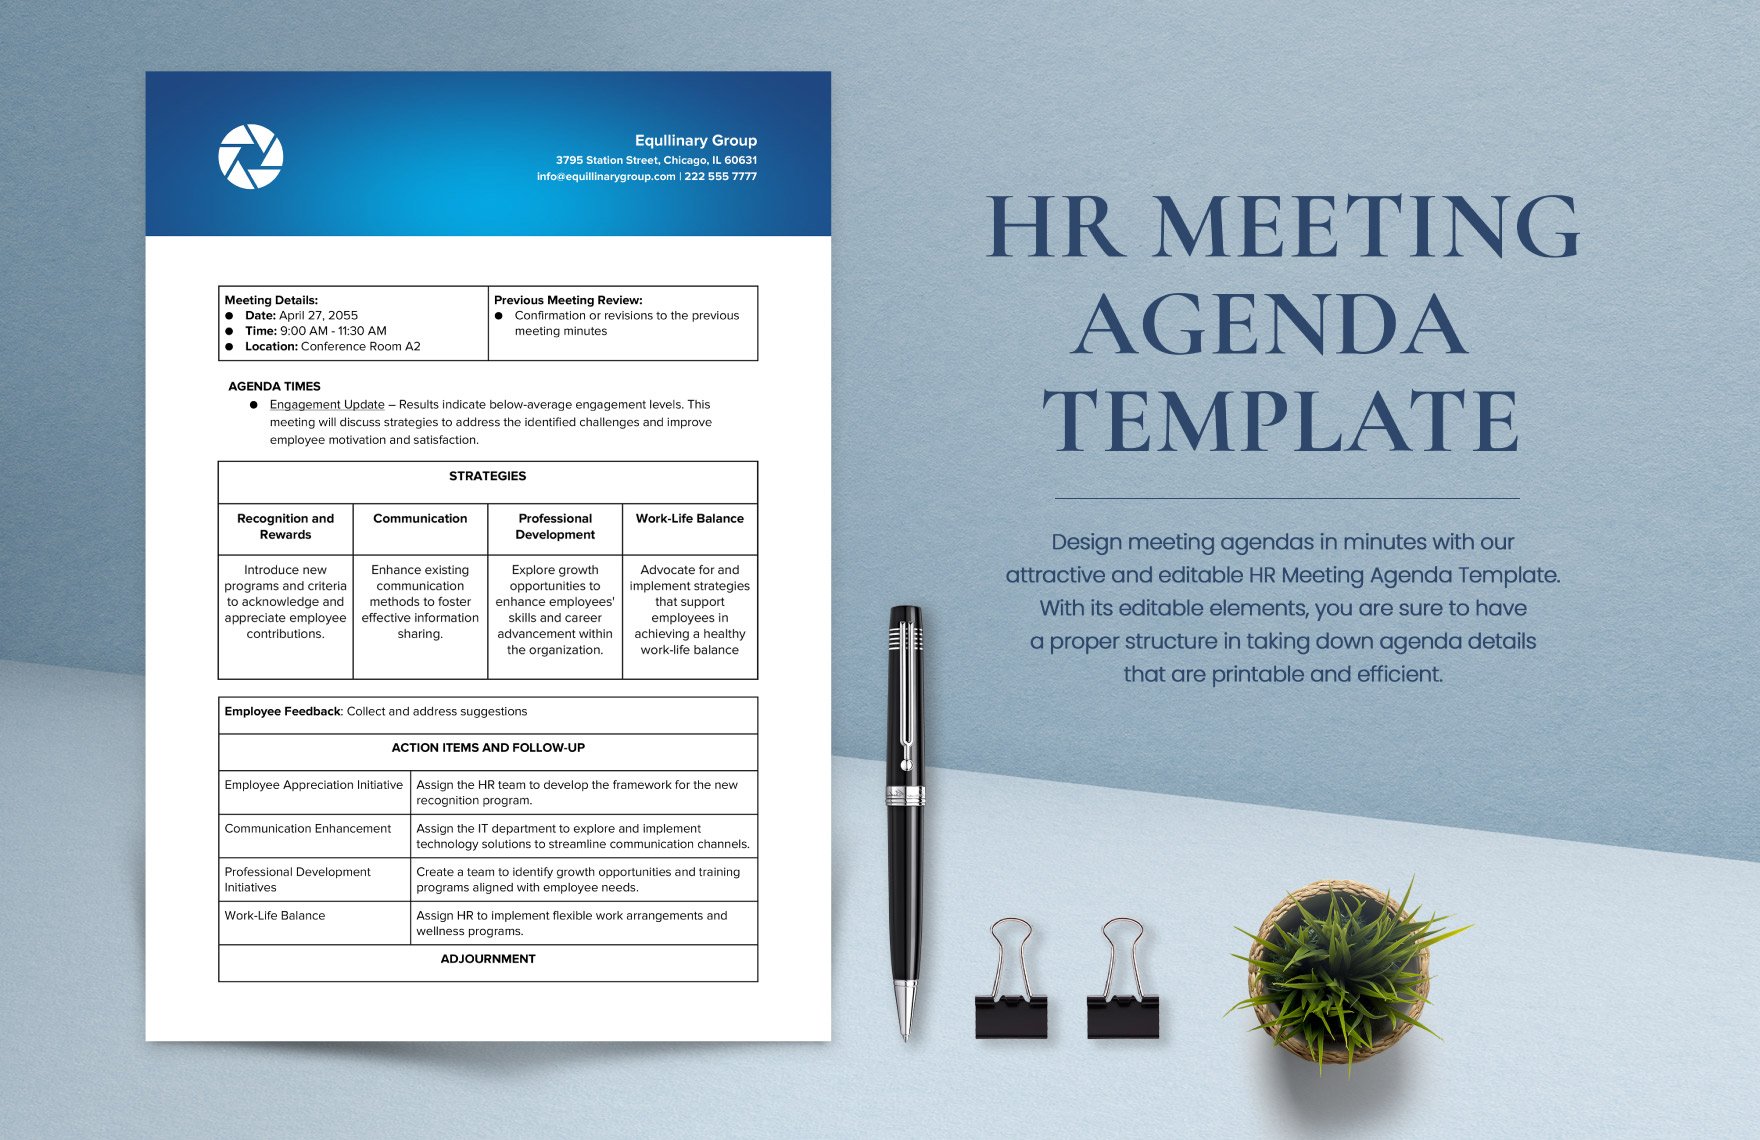 HR Meeting Agenda Template